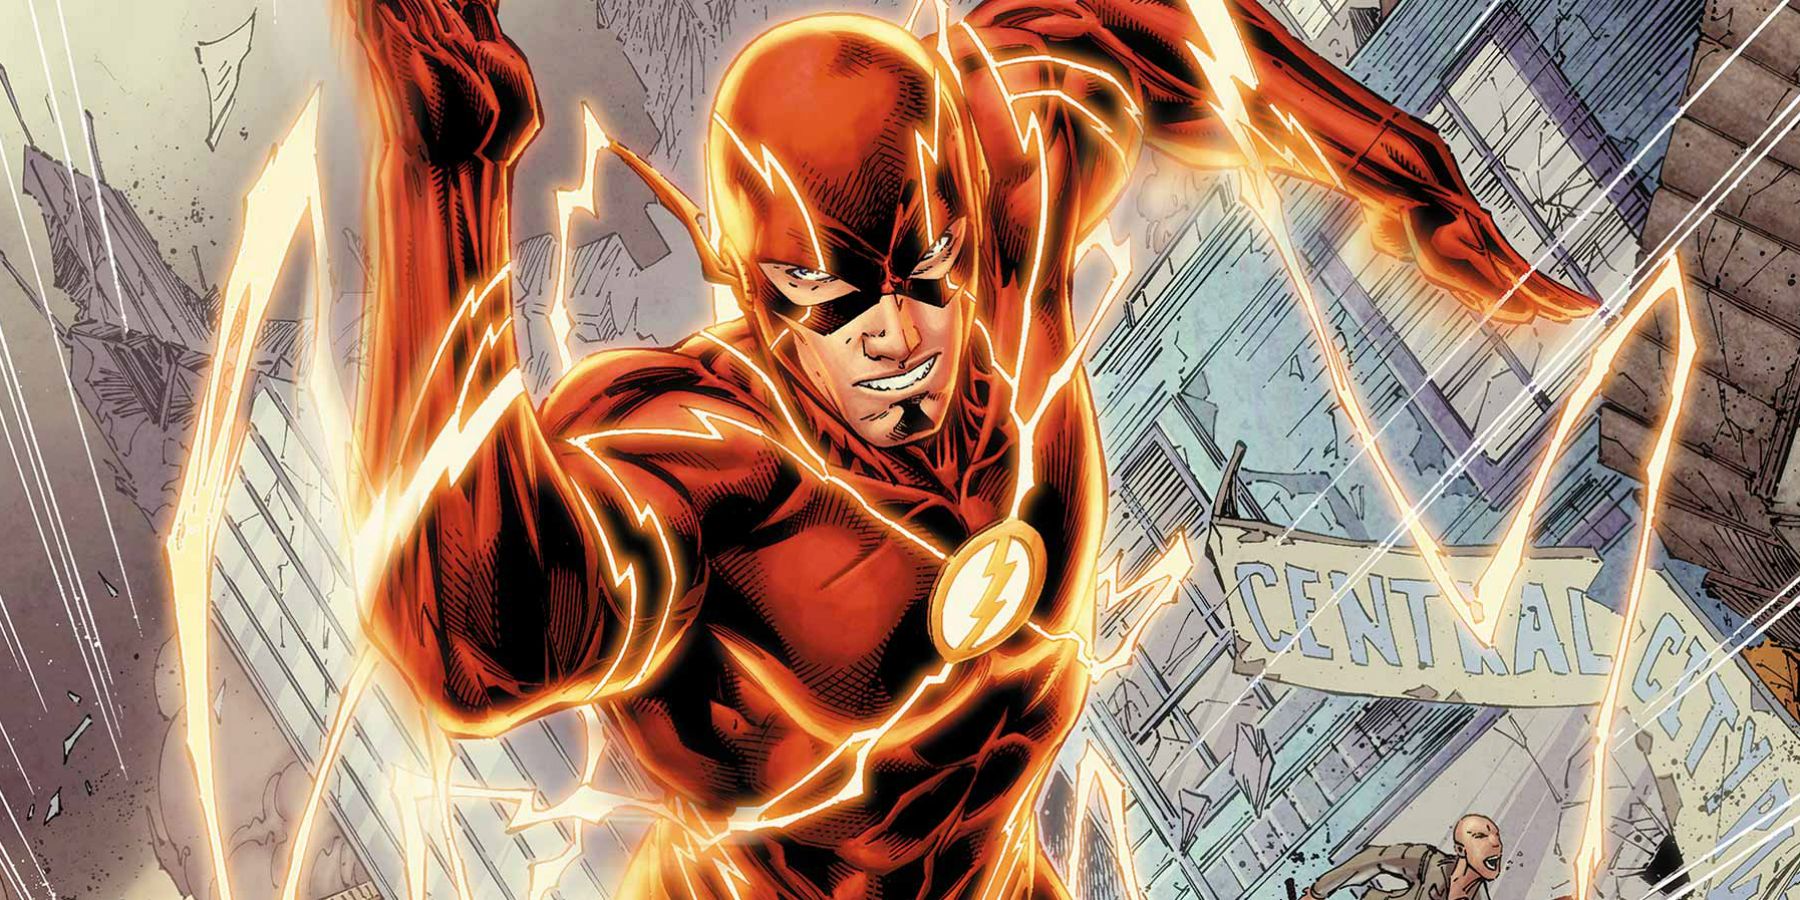 DC Comics' The Flash